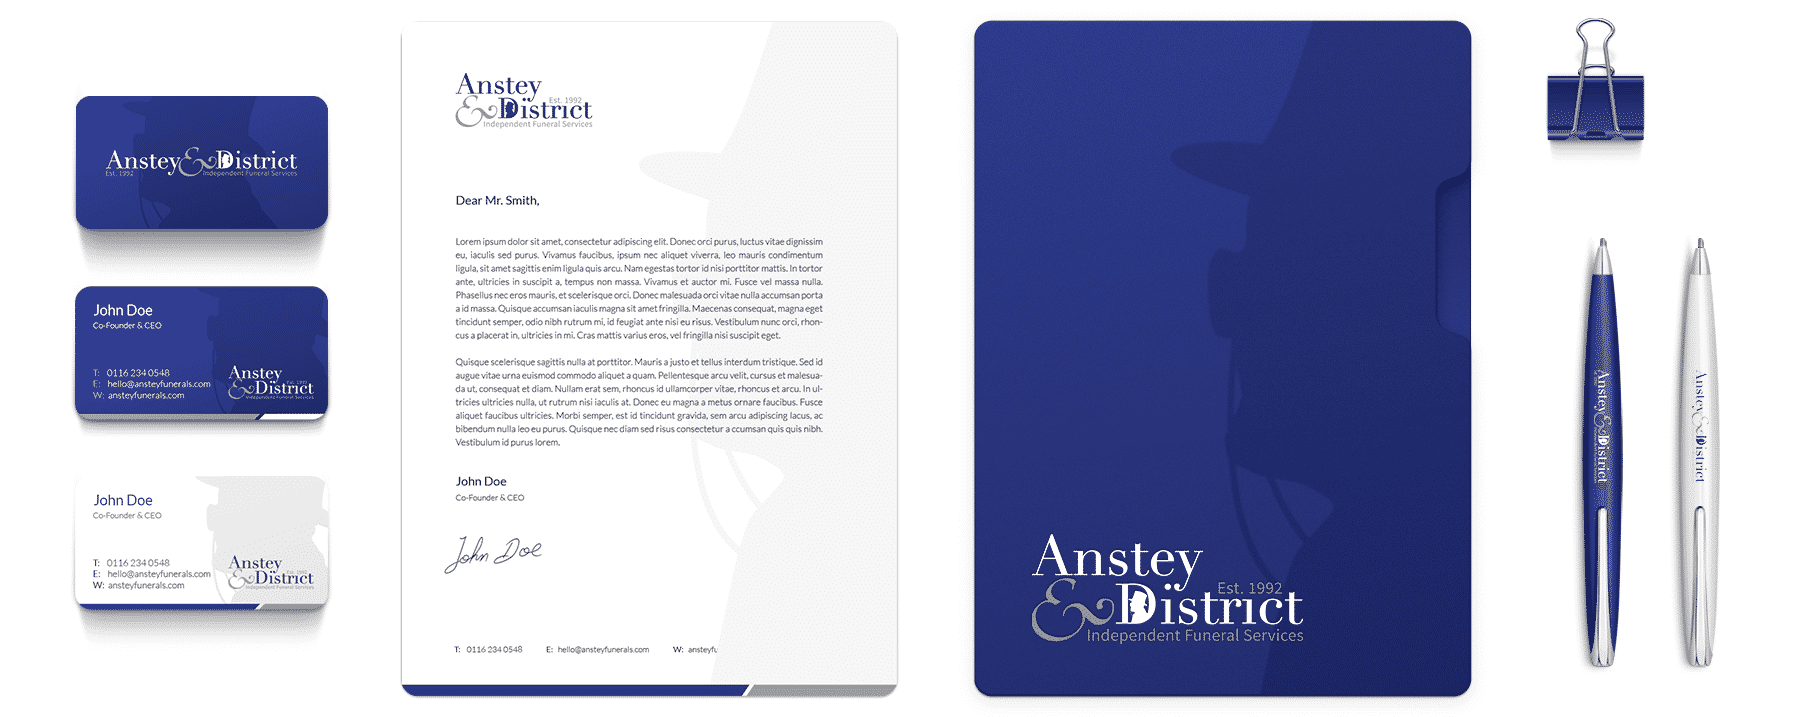 Anstey & District Funeral Services Brand Design